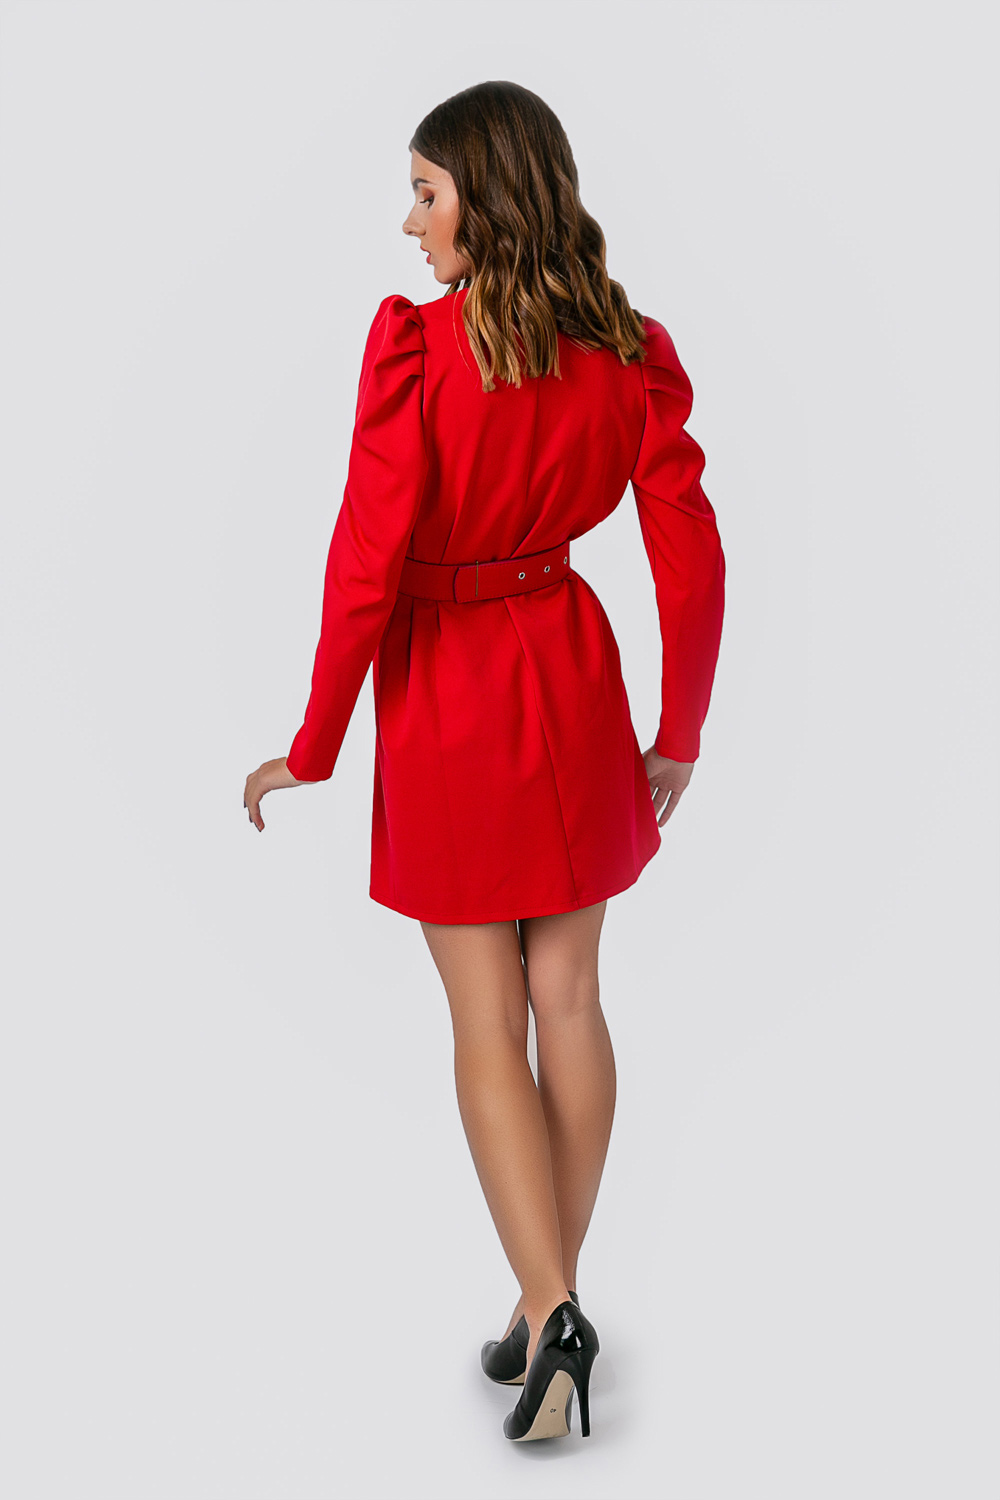 Red jacket dress with belt